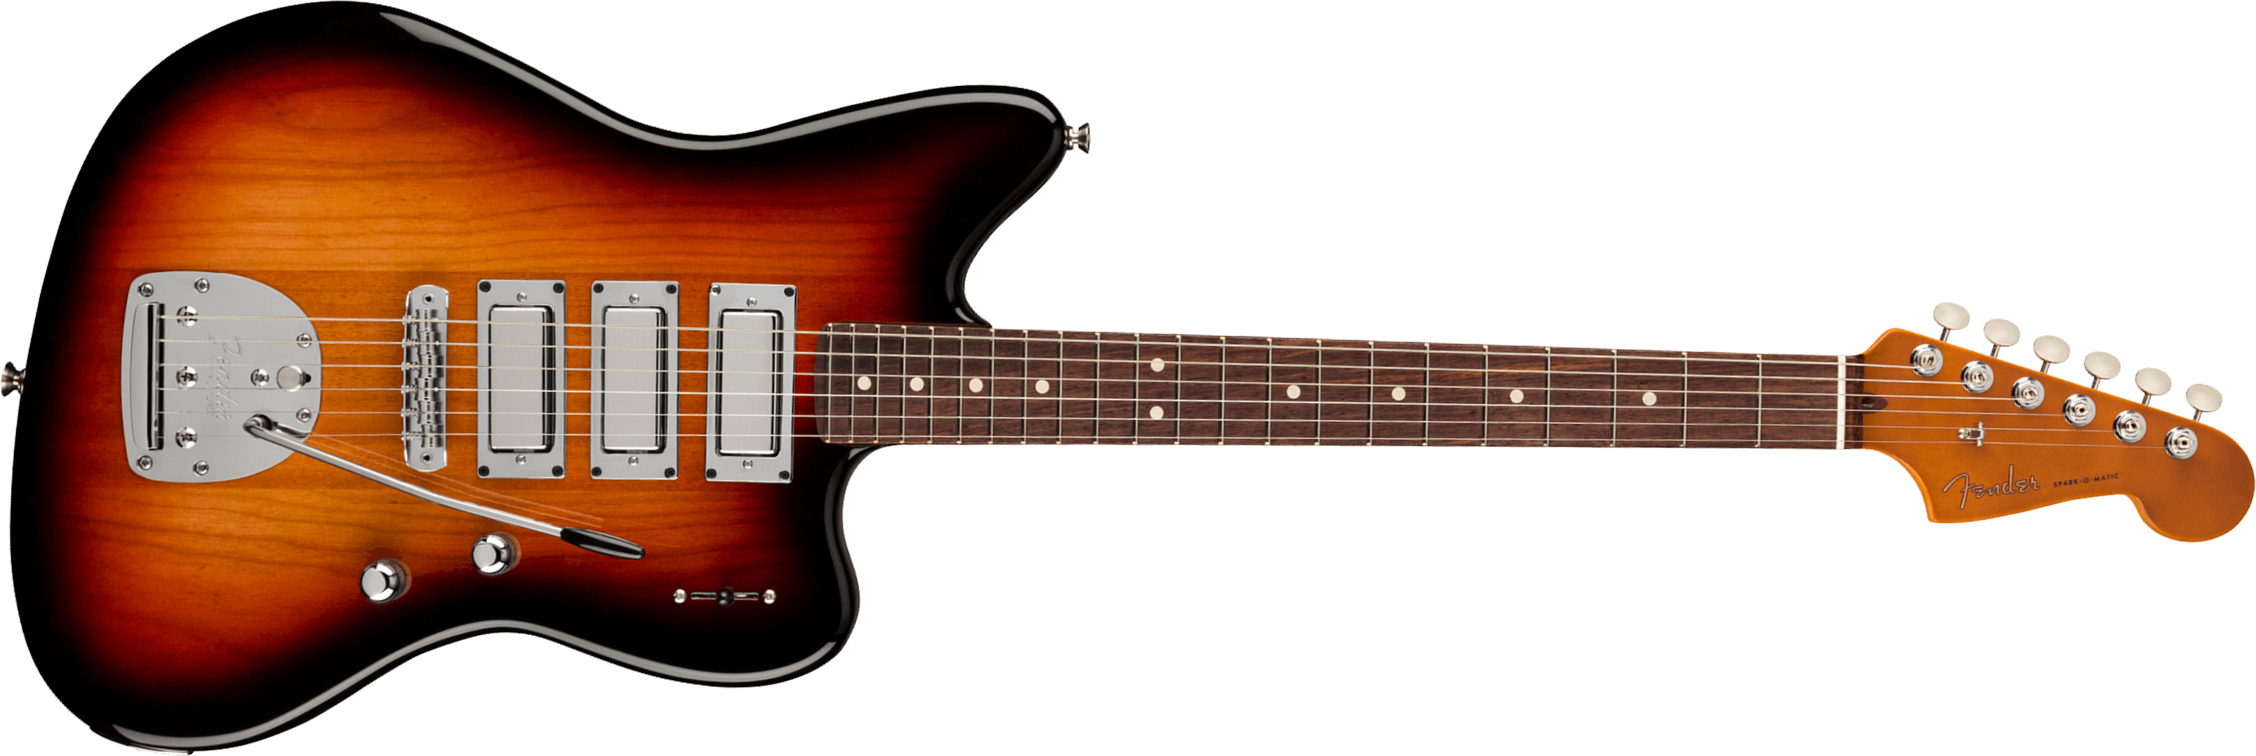 Fender Jazzmaster Spark-o-matic Volume Ii Parallel Universe Hhh Trem Rw - 3-color Sunburst - Retro rock electric guitar - Main picture